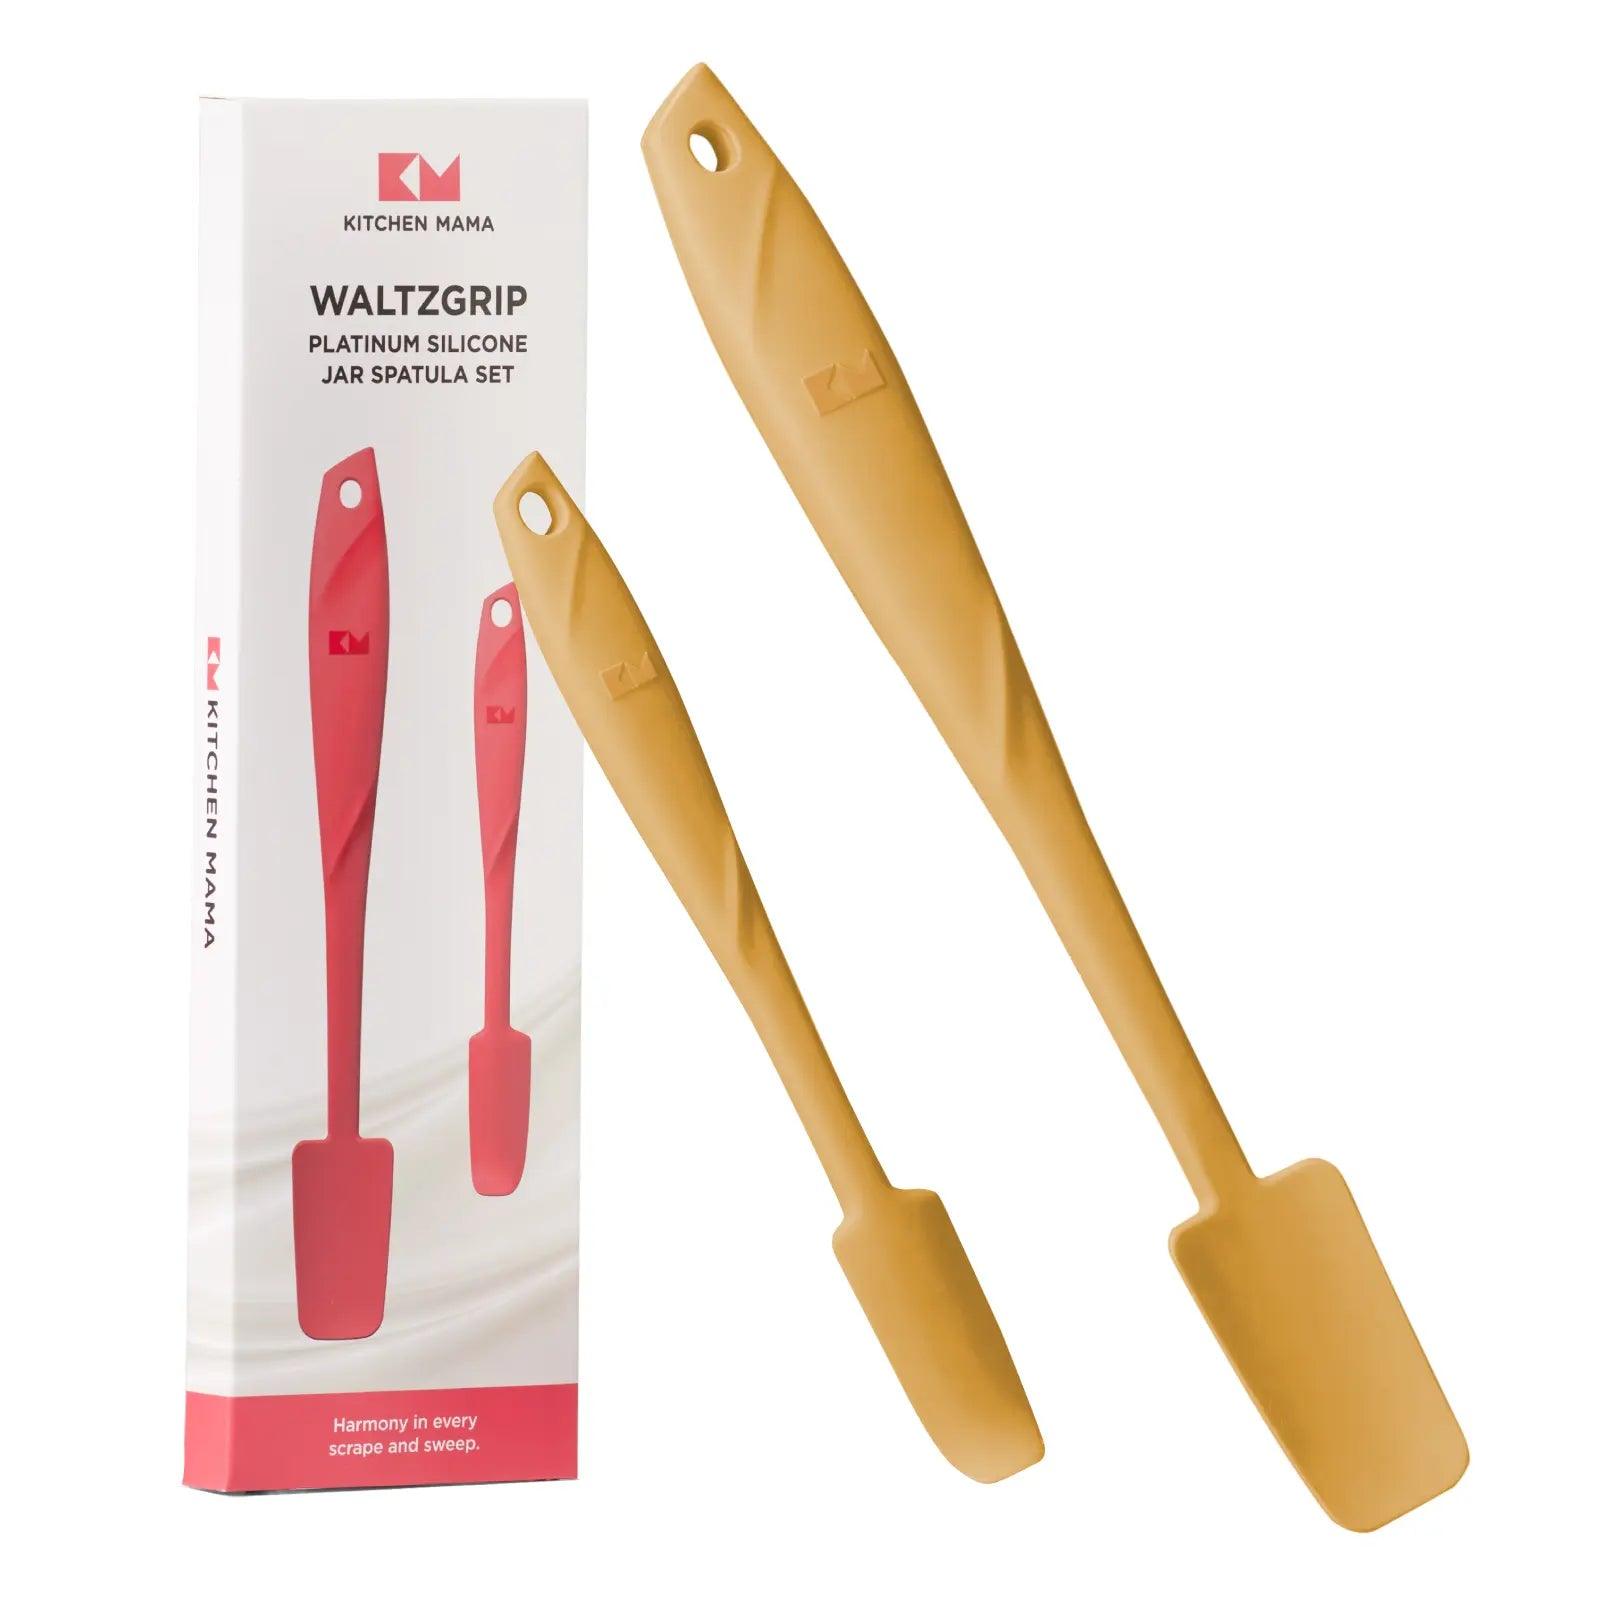 Kitchen Mama silicone jar spatula, Waltzgrip, platinum silicone jar spatula set, yellow